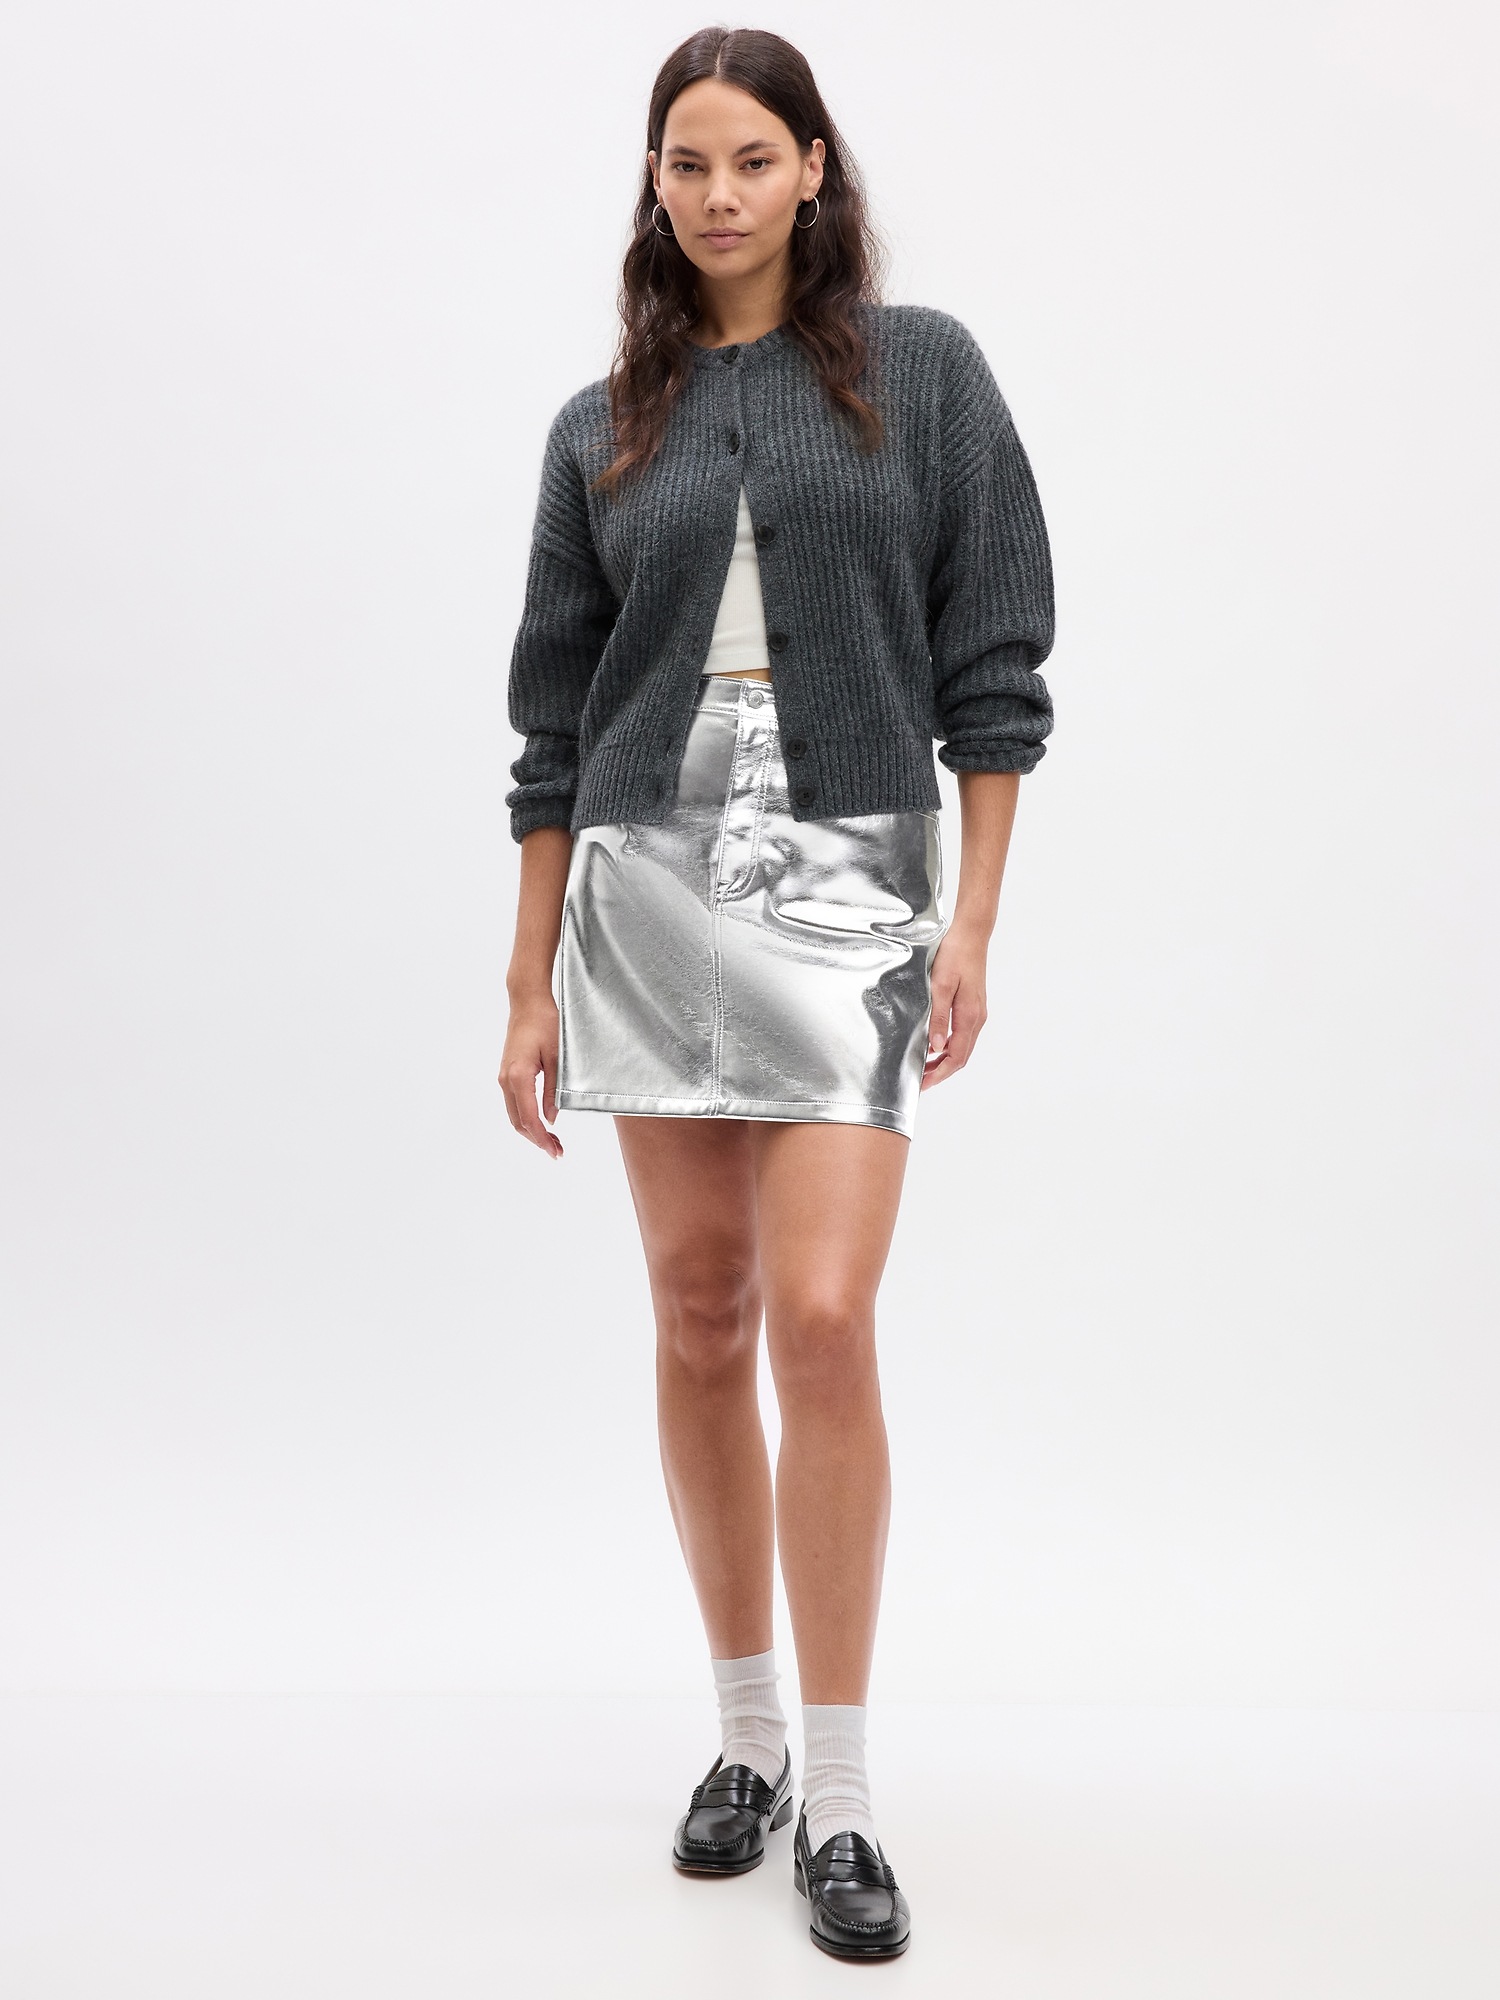 Shaggy Compact Cardigan ➕Leather skirt | uvastartuphub.com